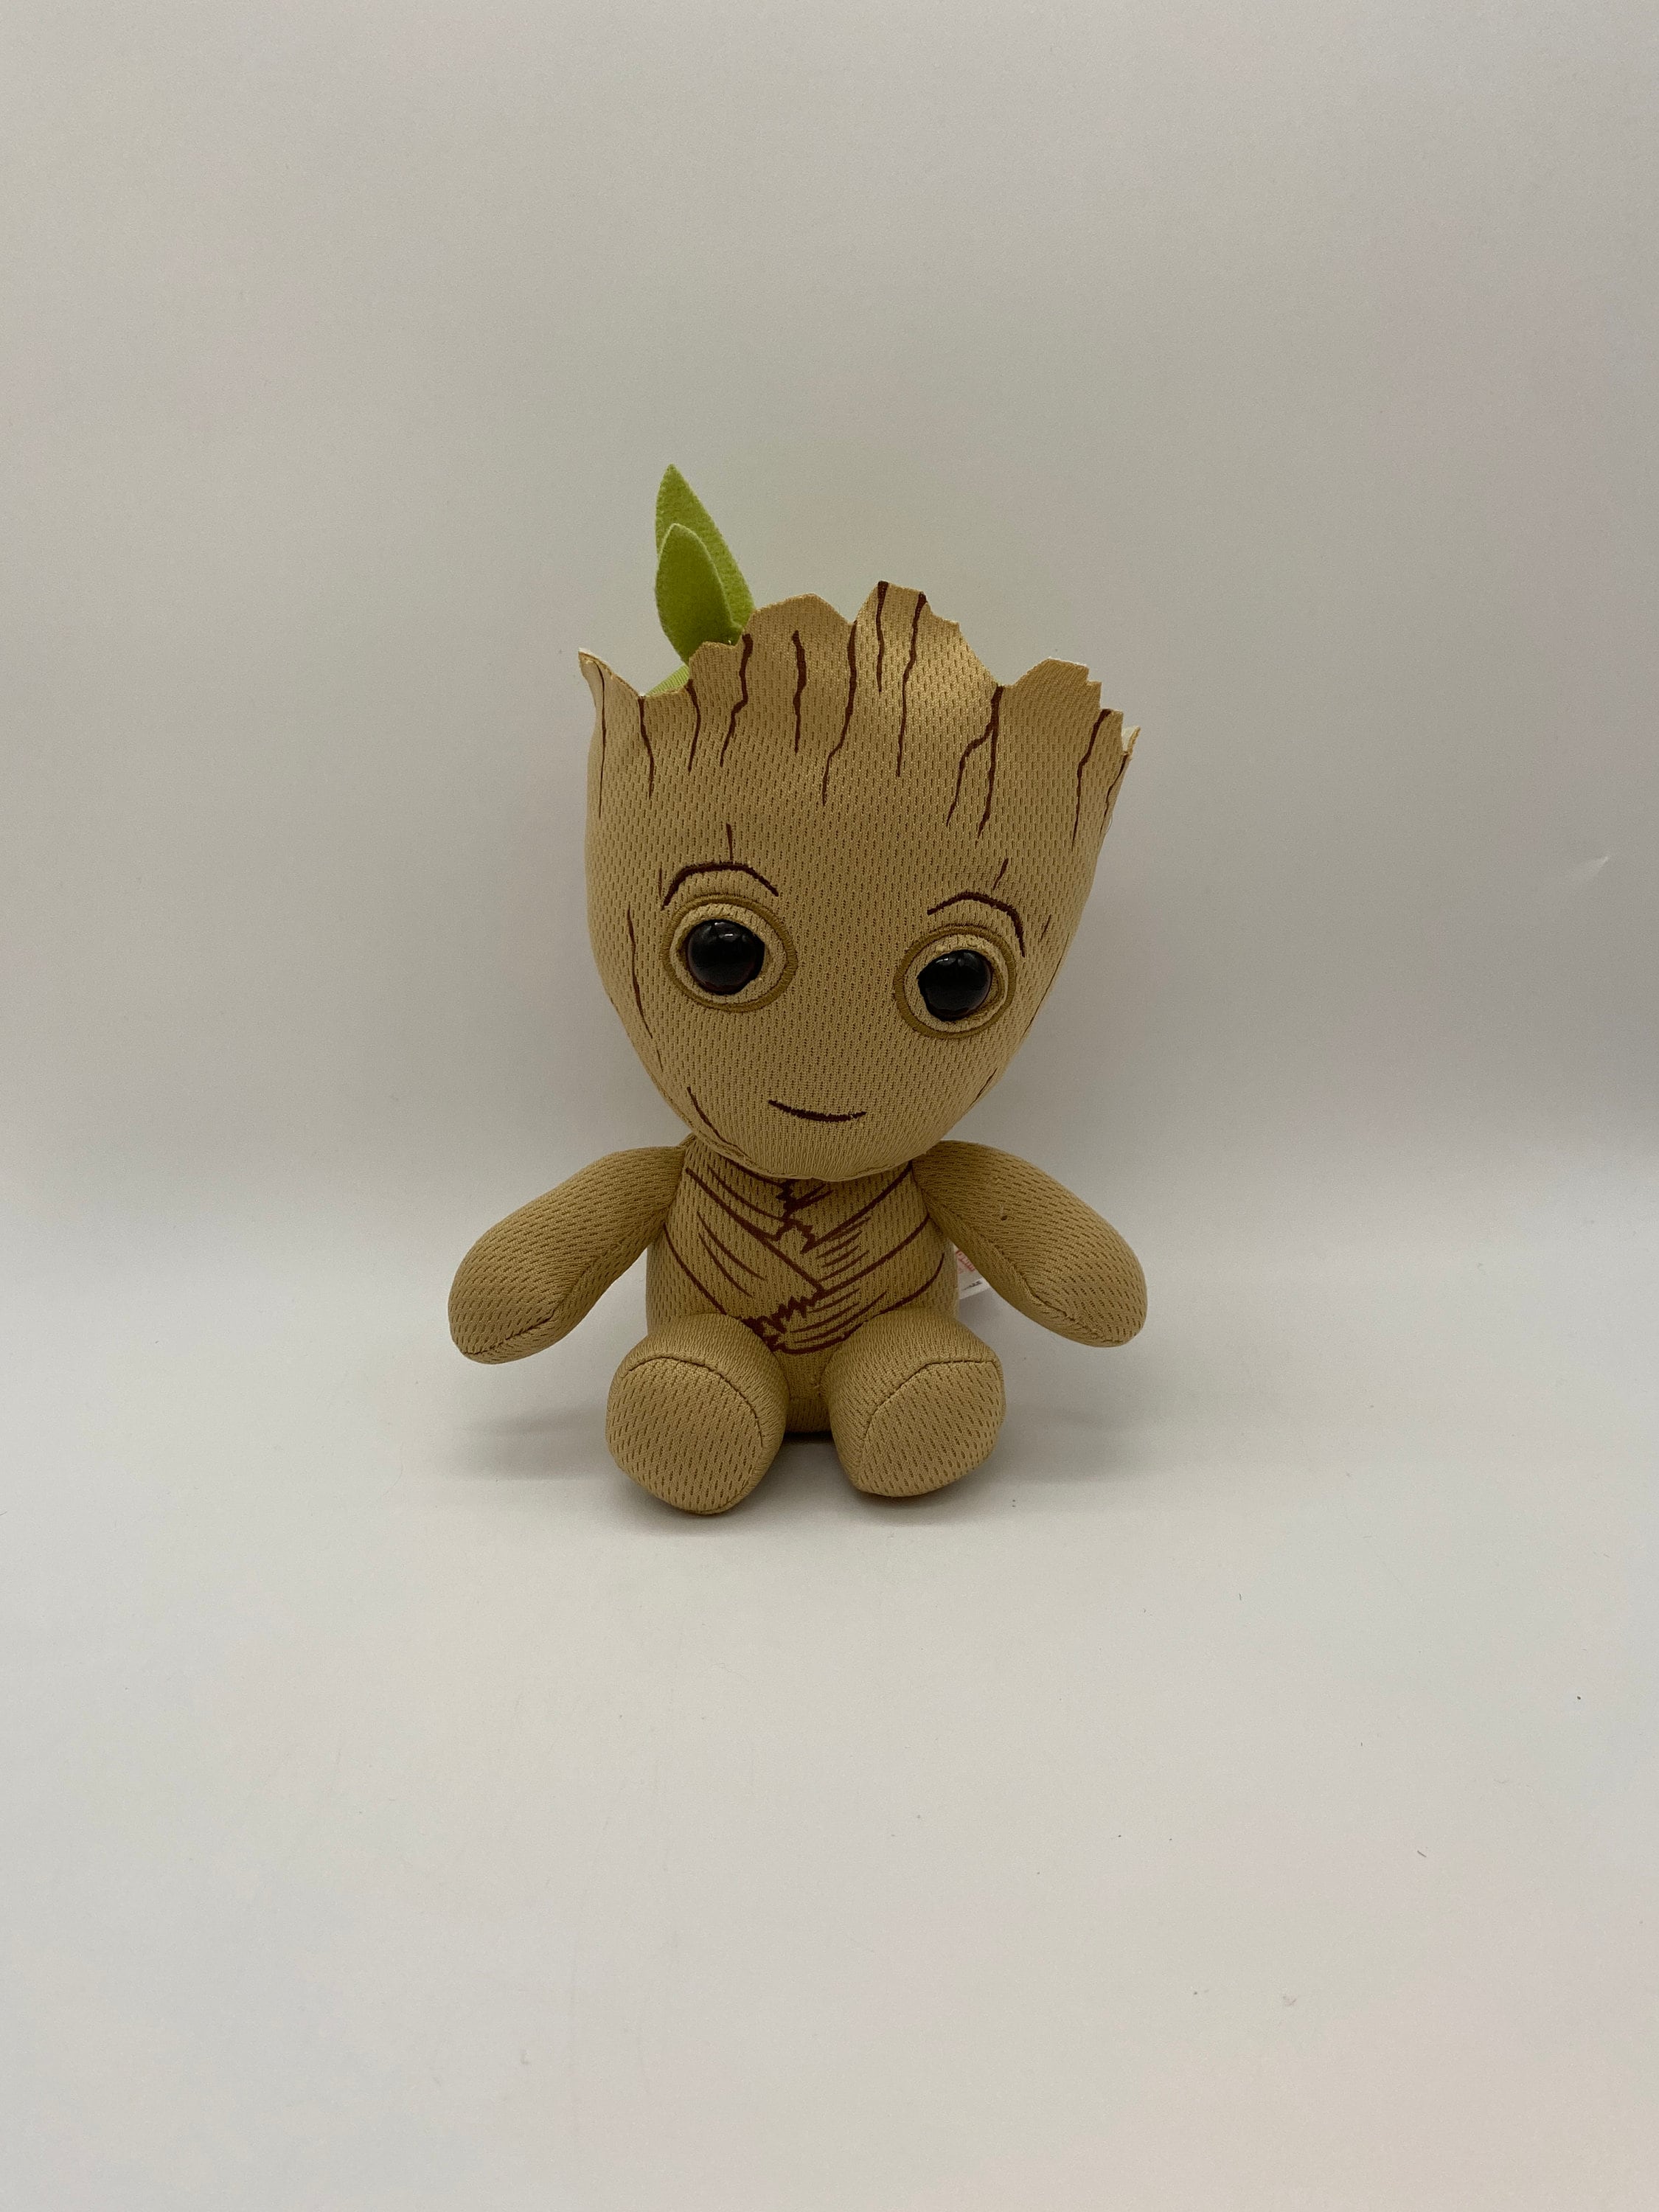 I am Groot - Groot Buisson, Les Gardiens De La Galaxie Figurine en peluche